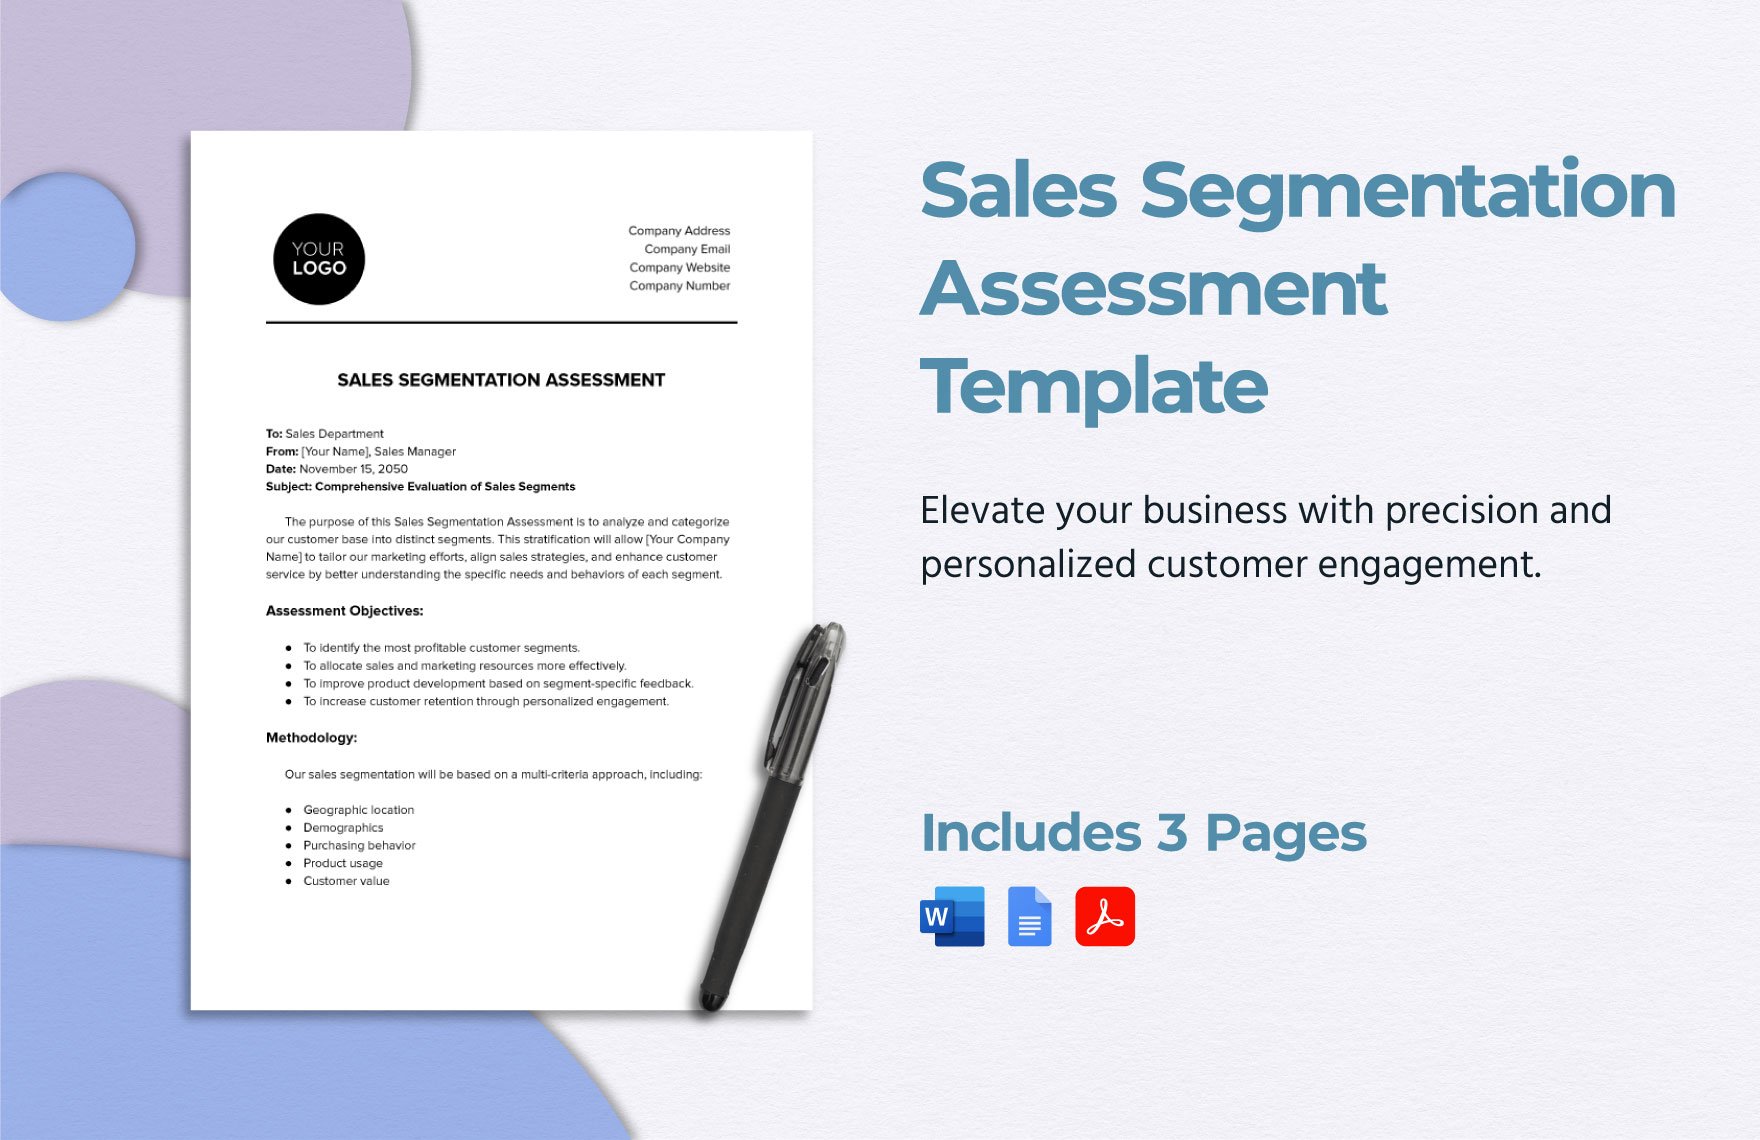 Sales Segmentation Assessment Template